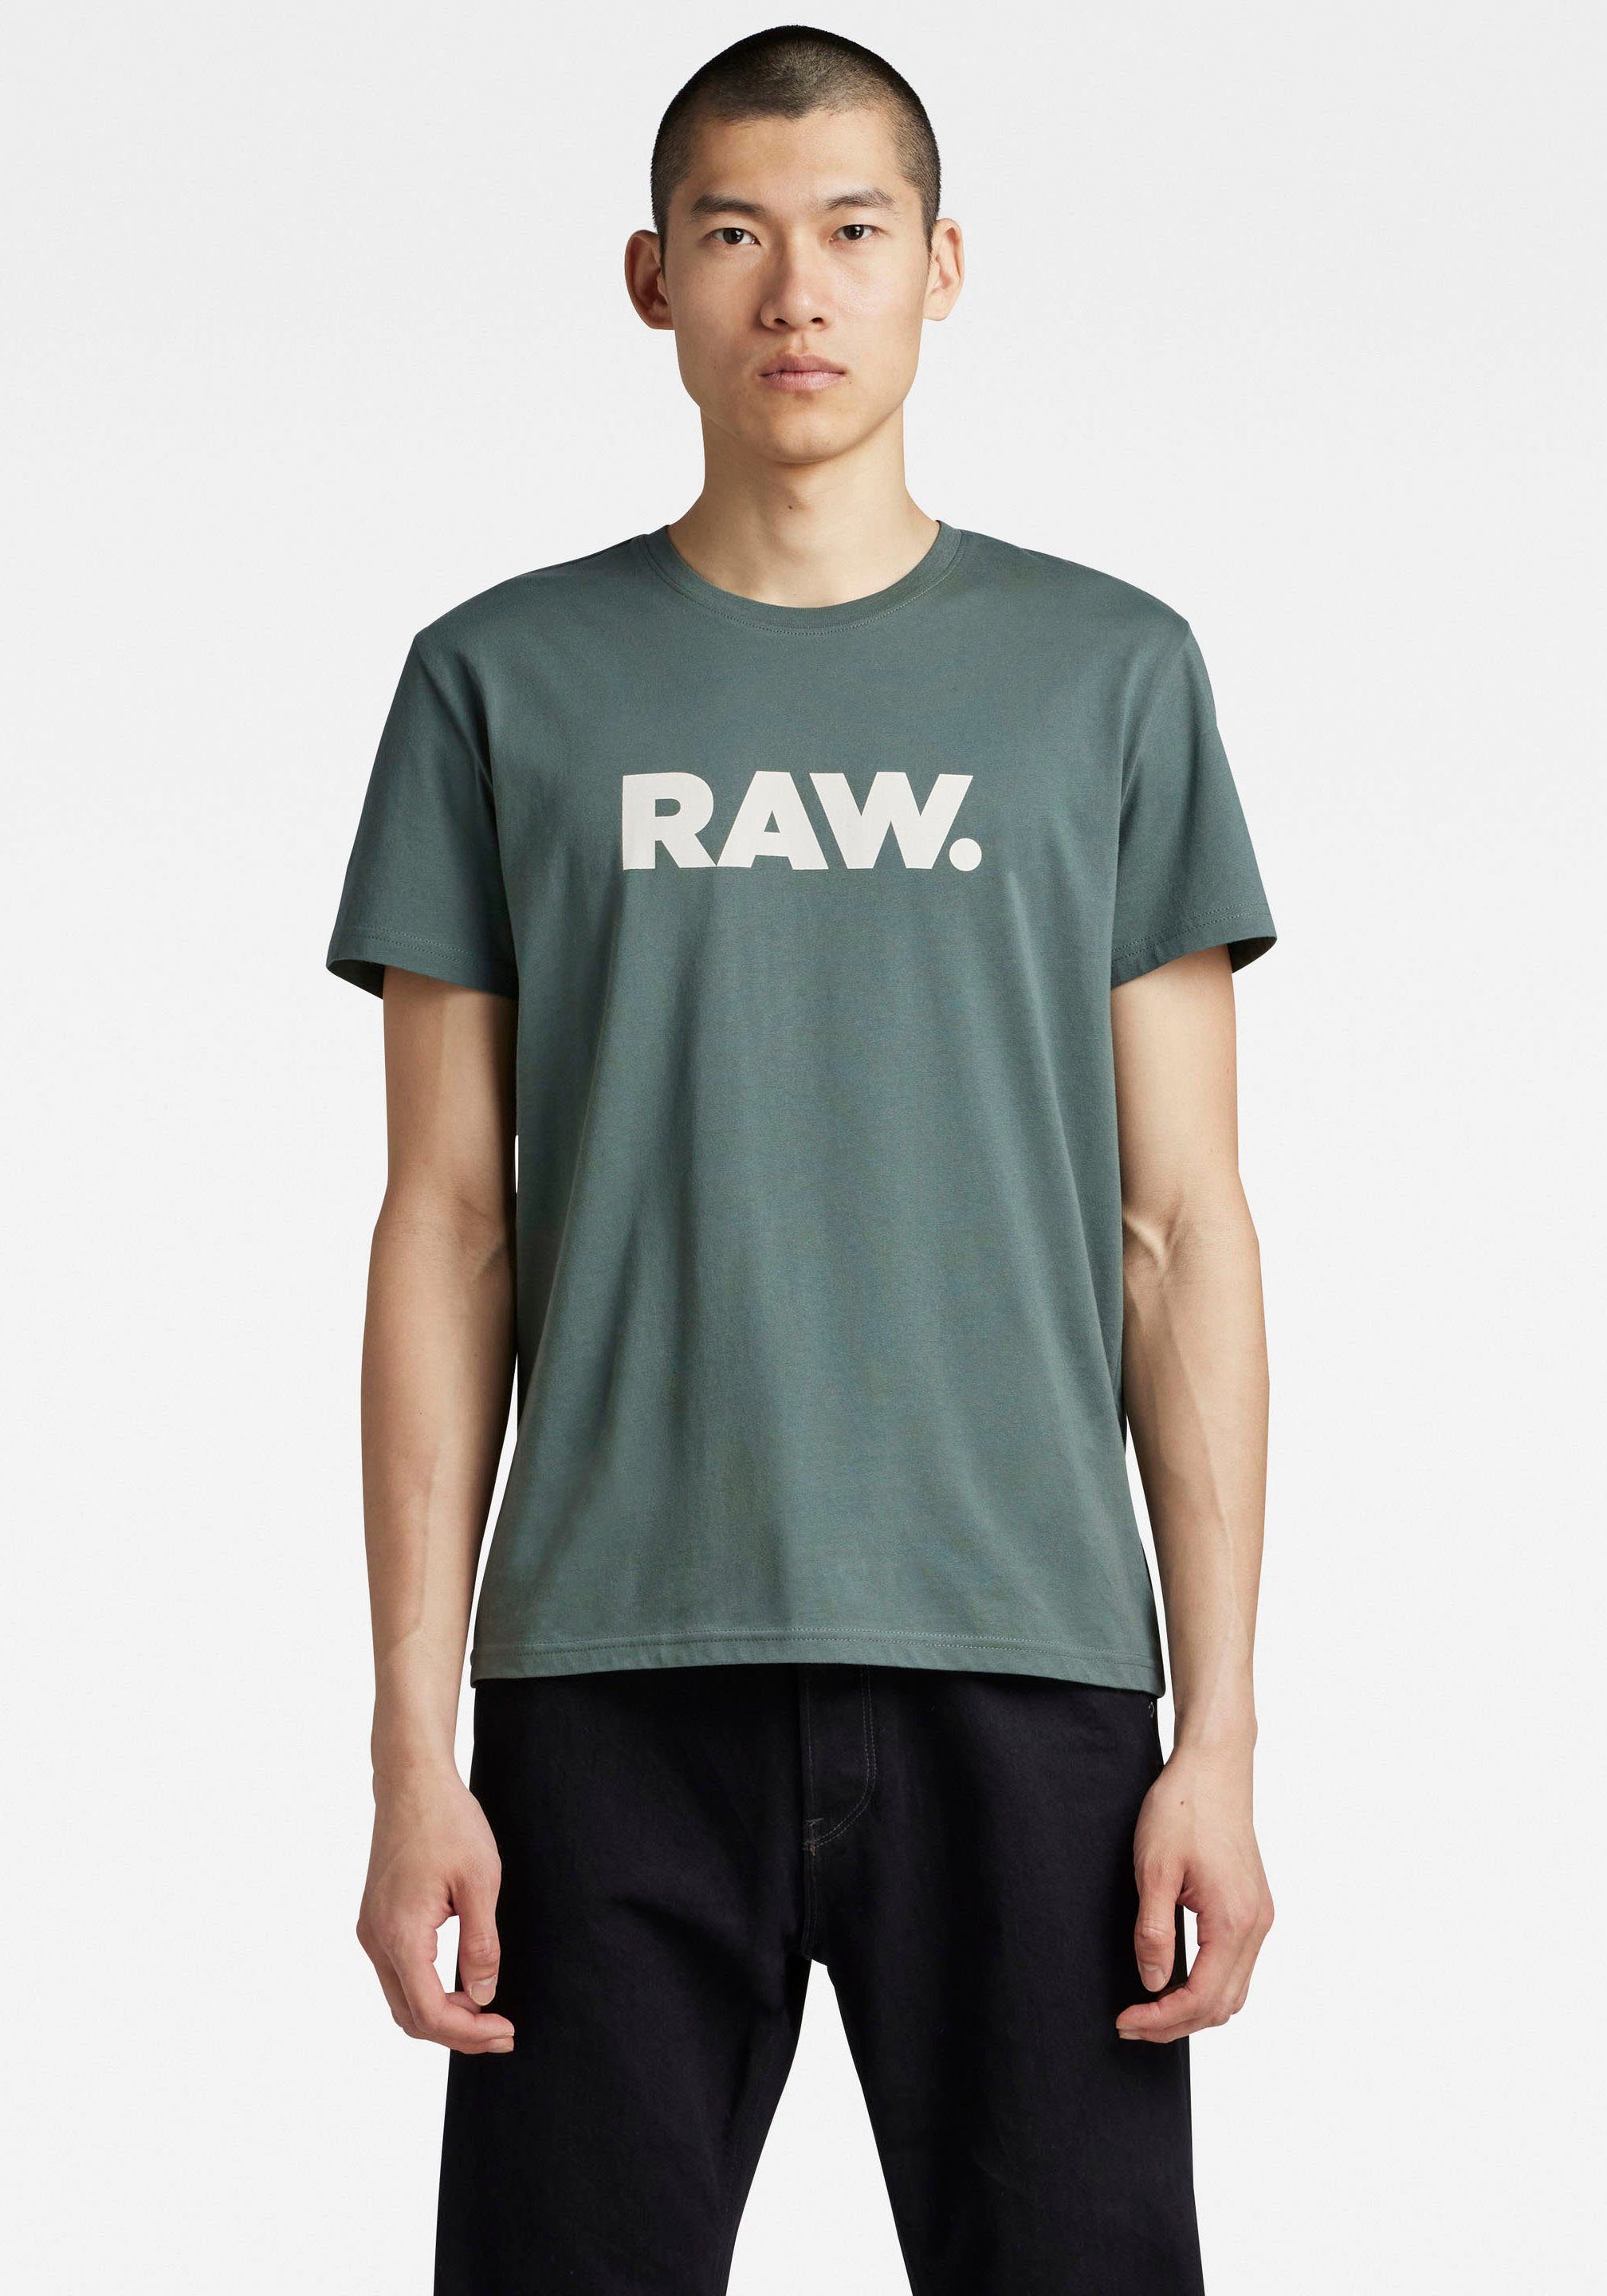 G-Star RAW Print-Shirt T-Shirt Holorn r t grey moss